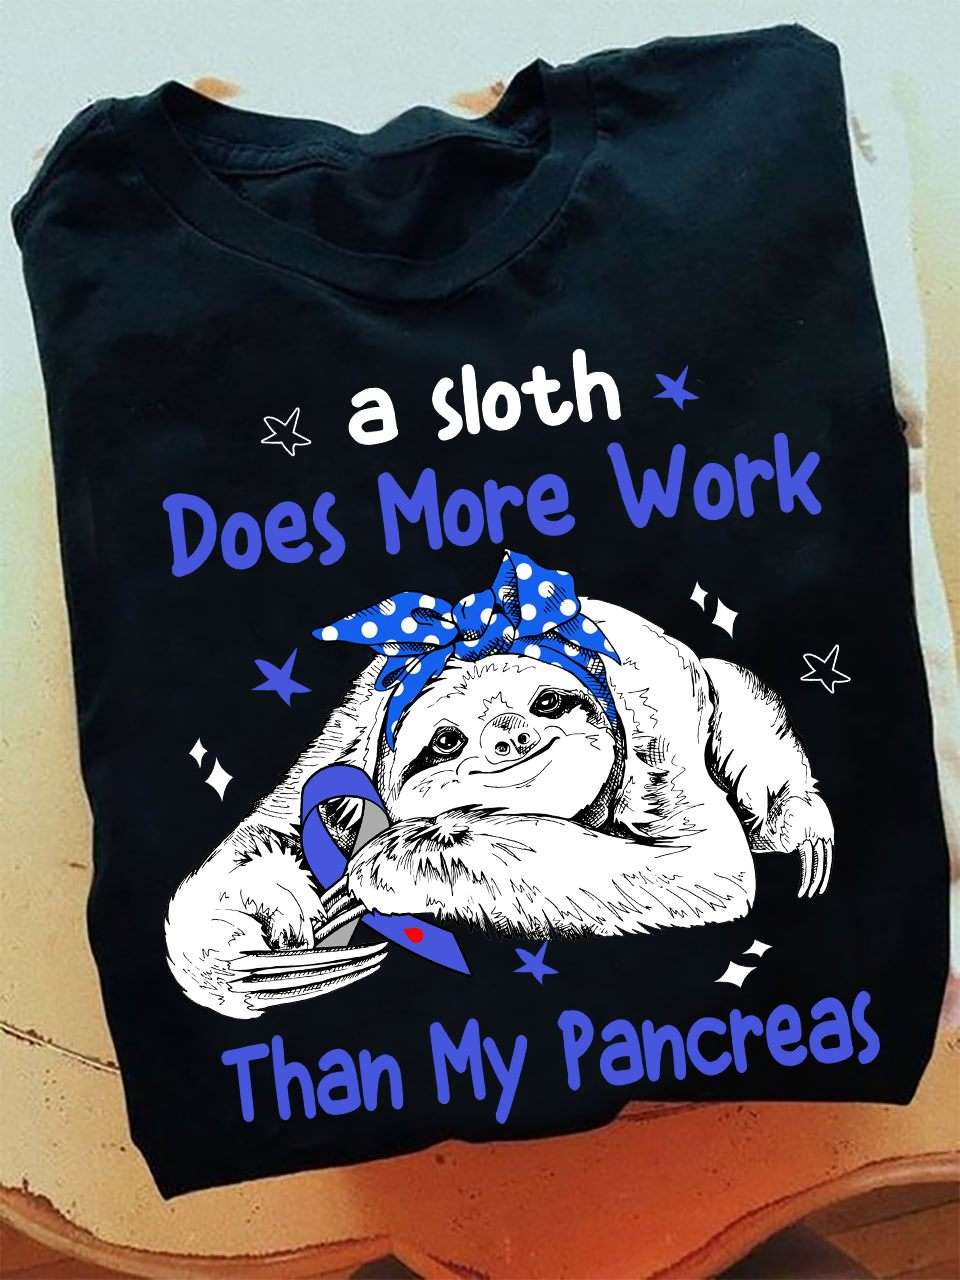 Pancreatic Cancer Sloth - A sloth does more work than my pancreas